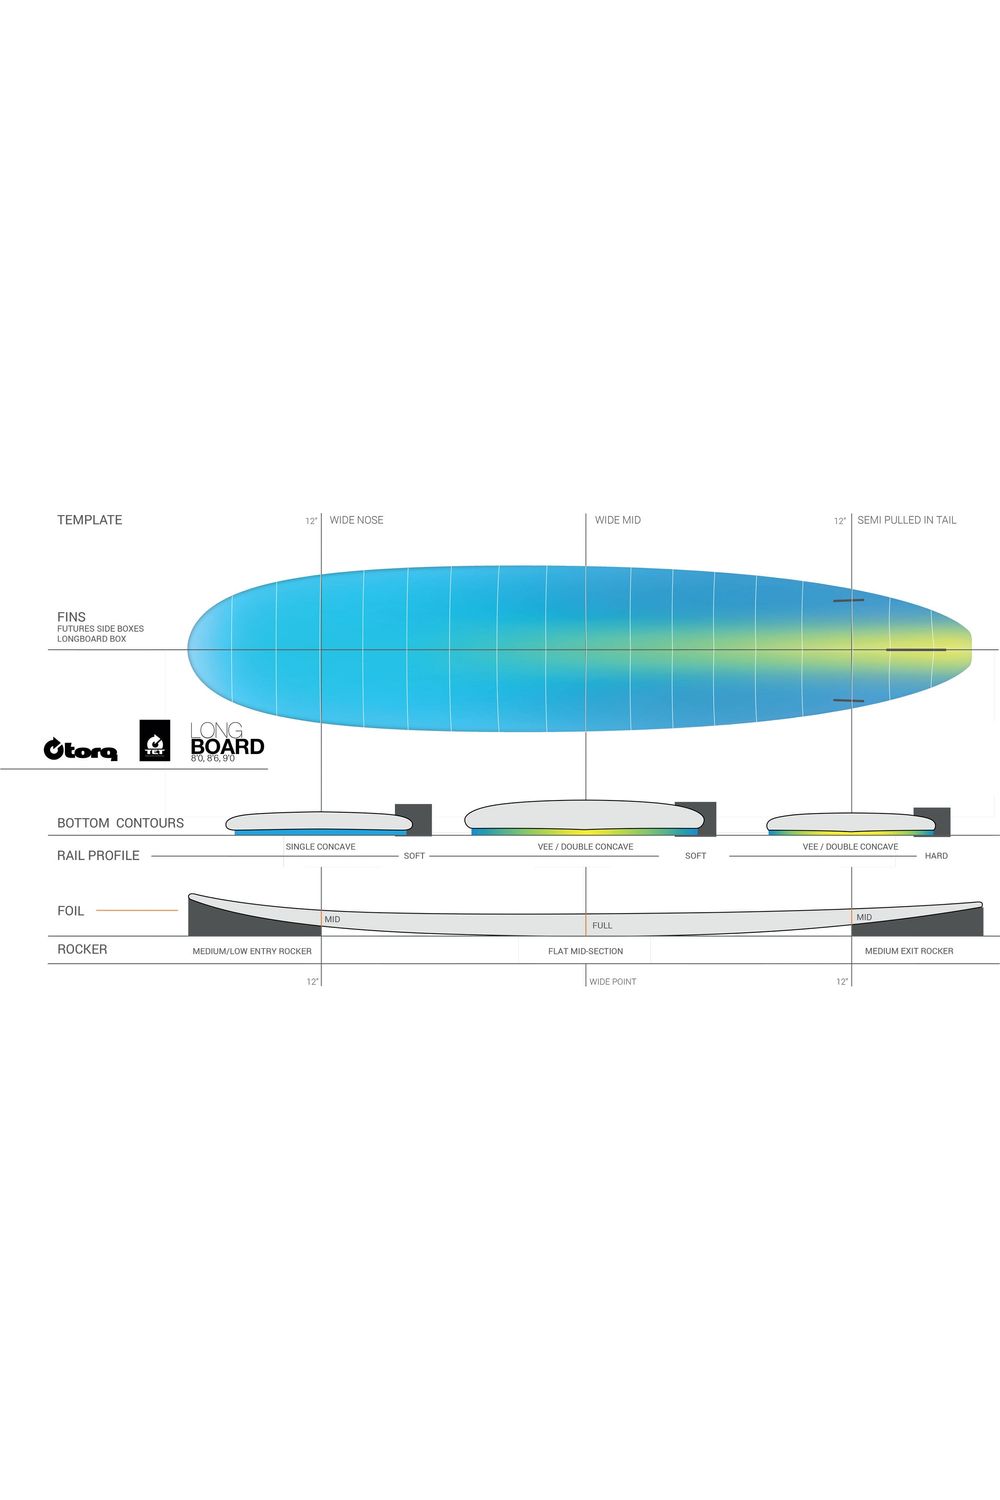 Torq TET Long Surfboard in Pinline Navy Blue